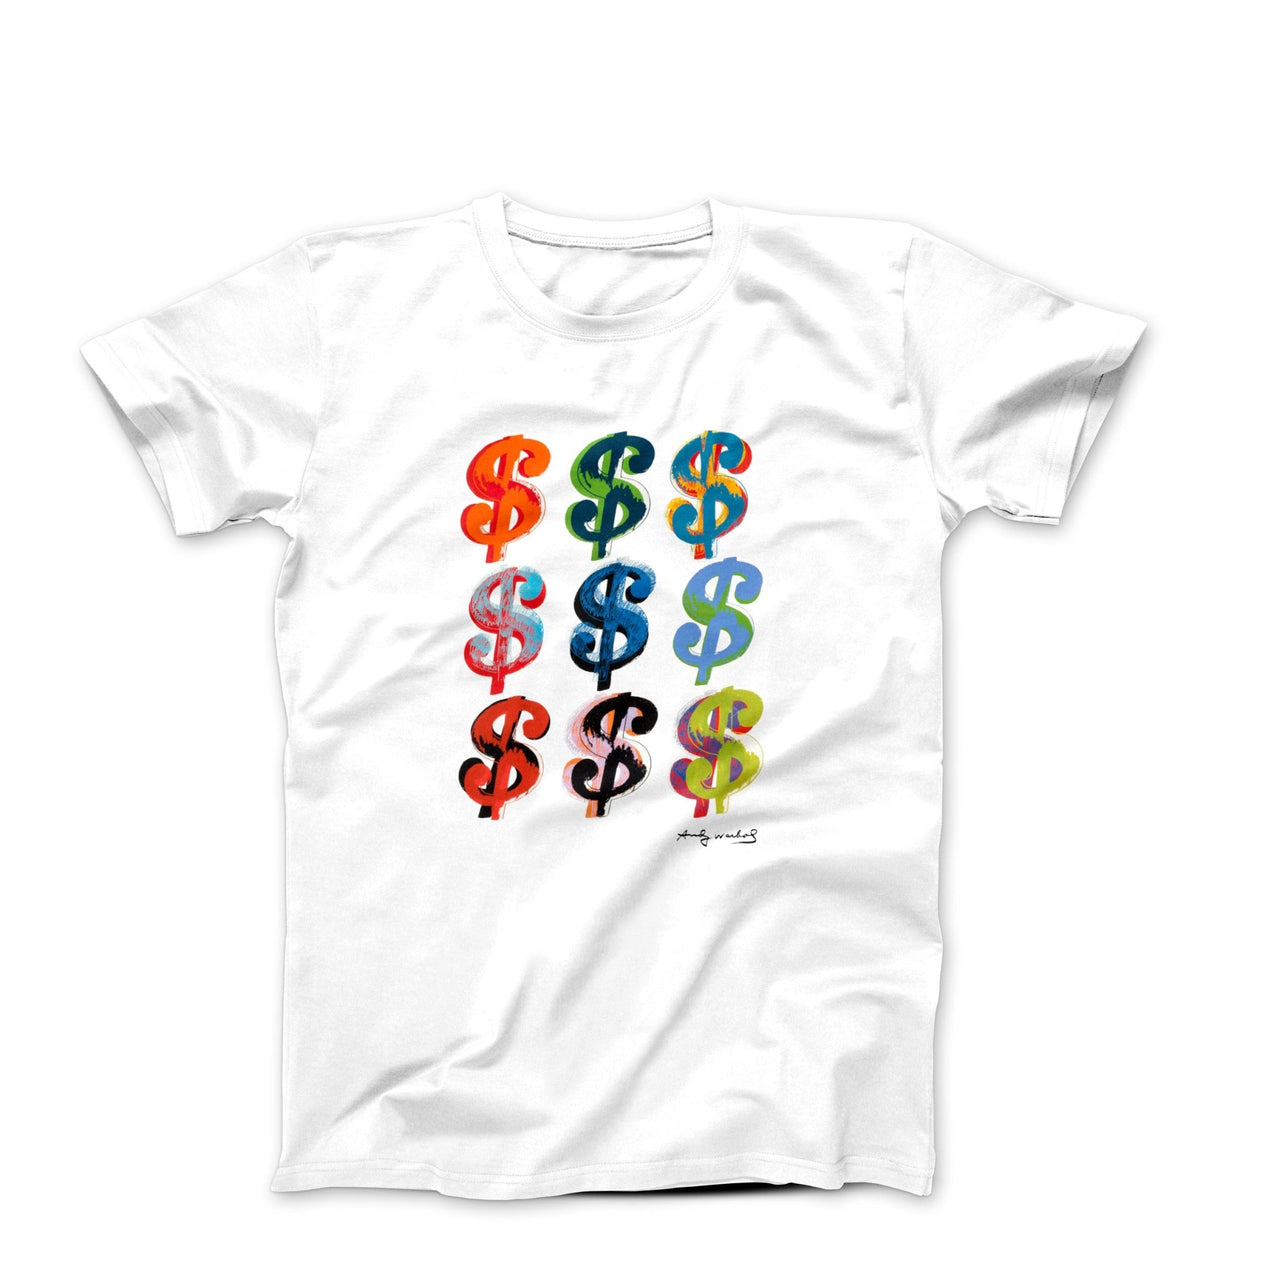 Andy Warhol Dollar Sign (1981) Artwork T-shirt - Clothing - Harvey Ltd